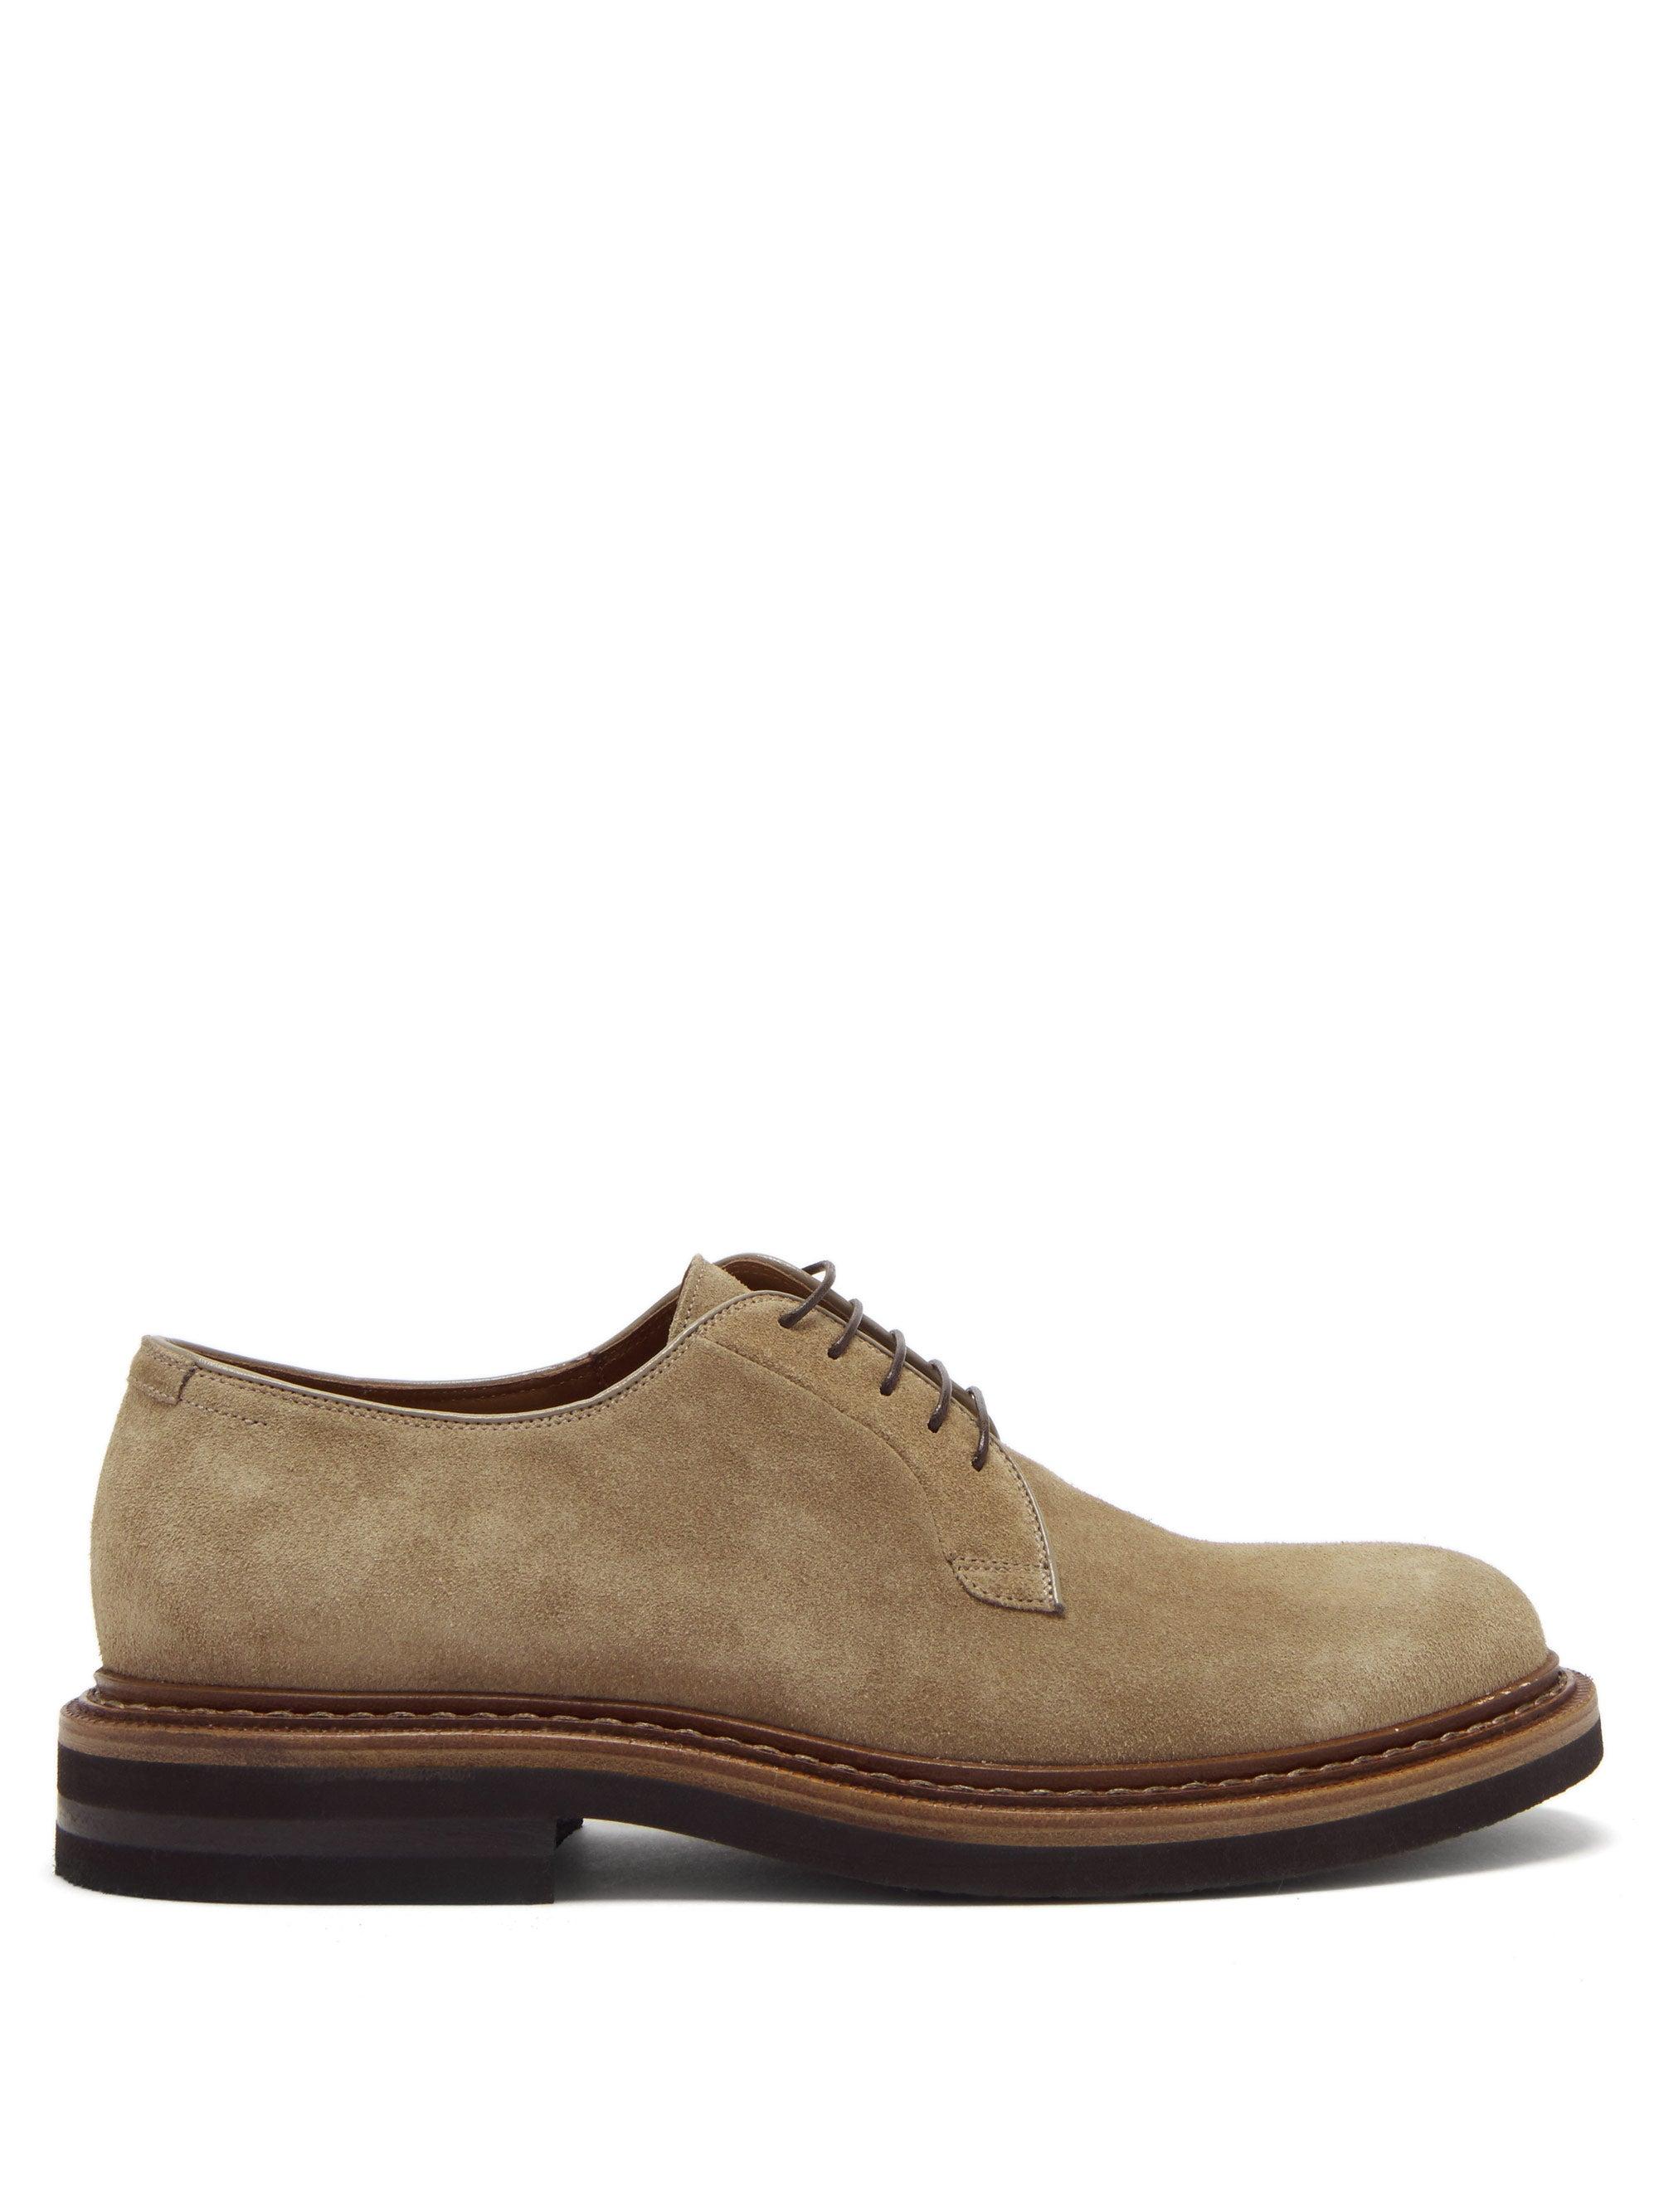 Brunello Cucinelli Suede Derby Shoes for Men - Lyst